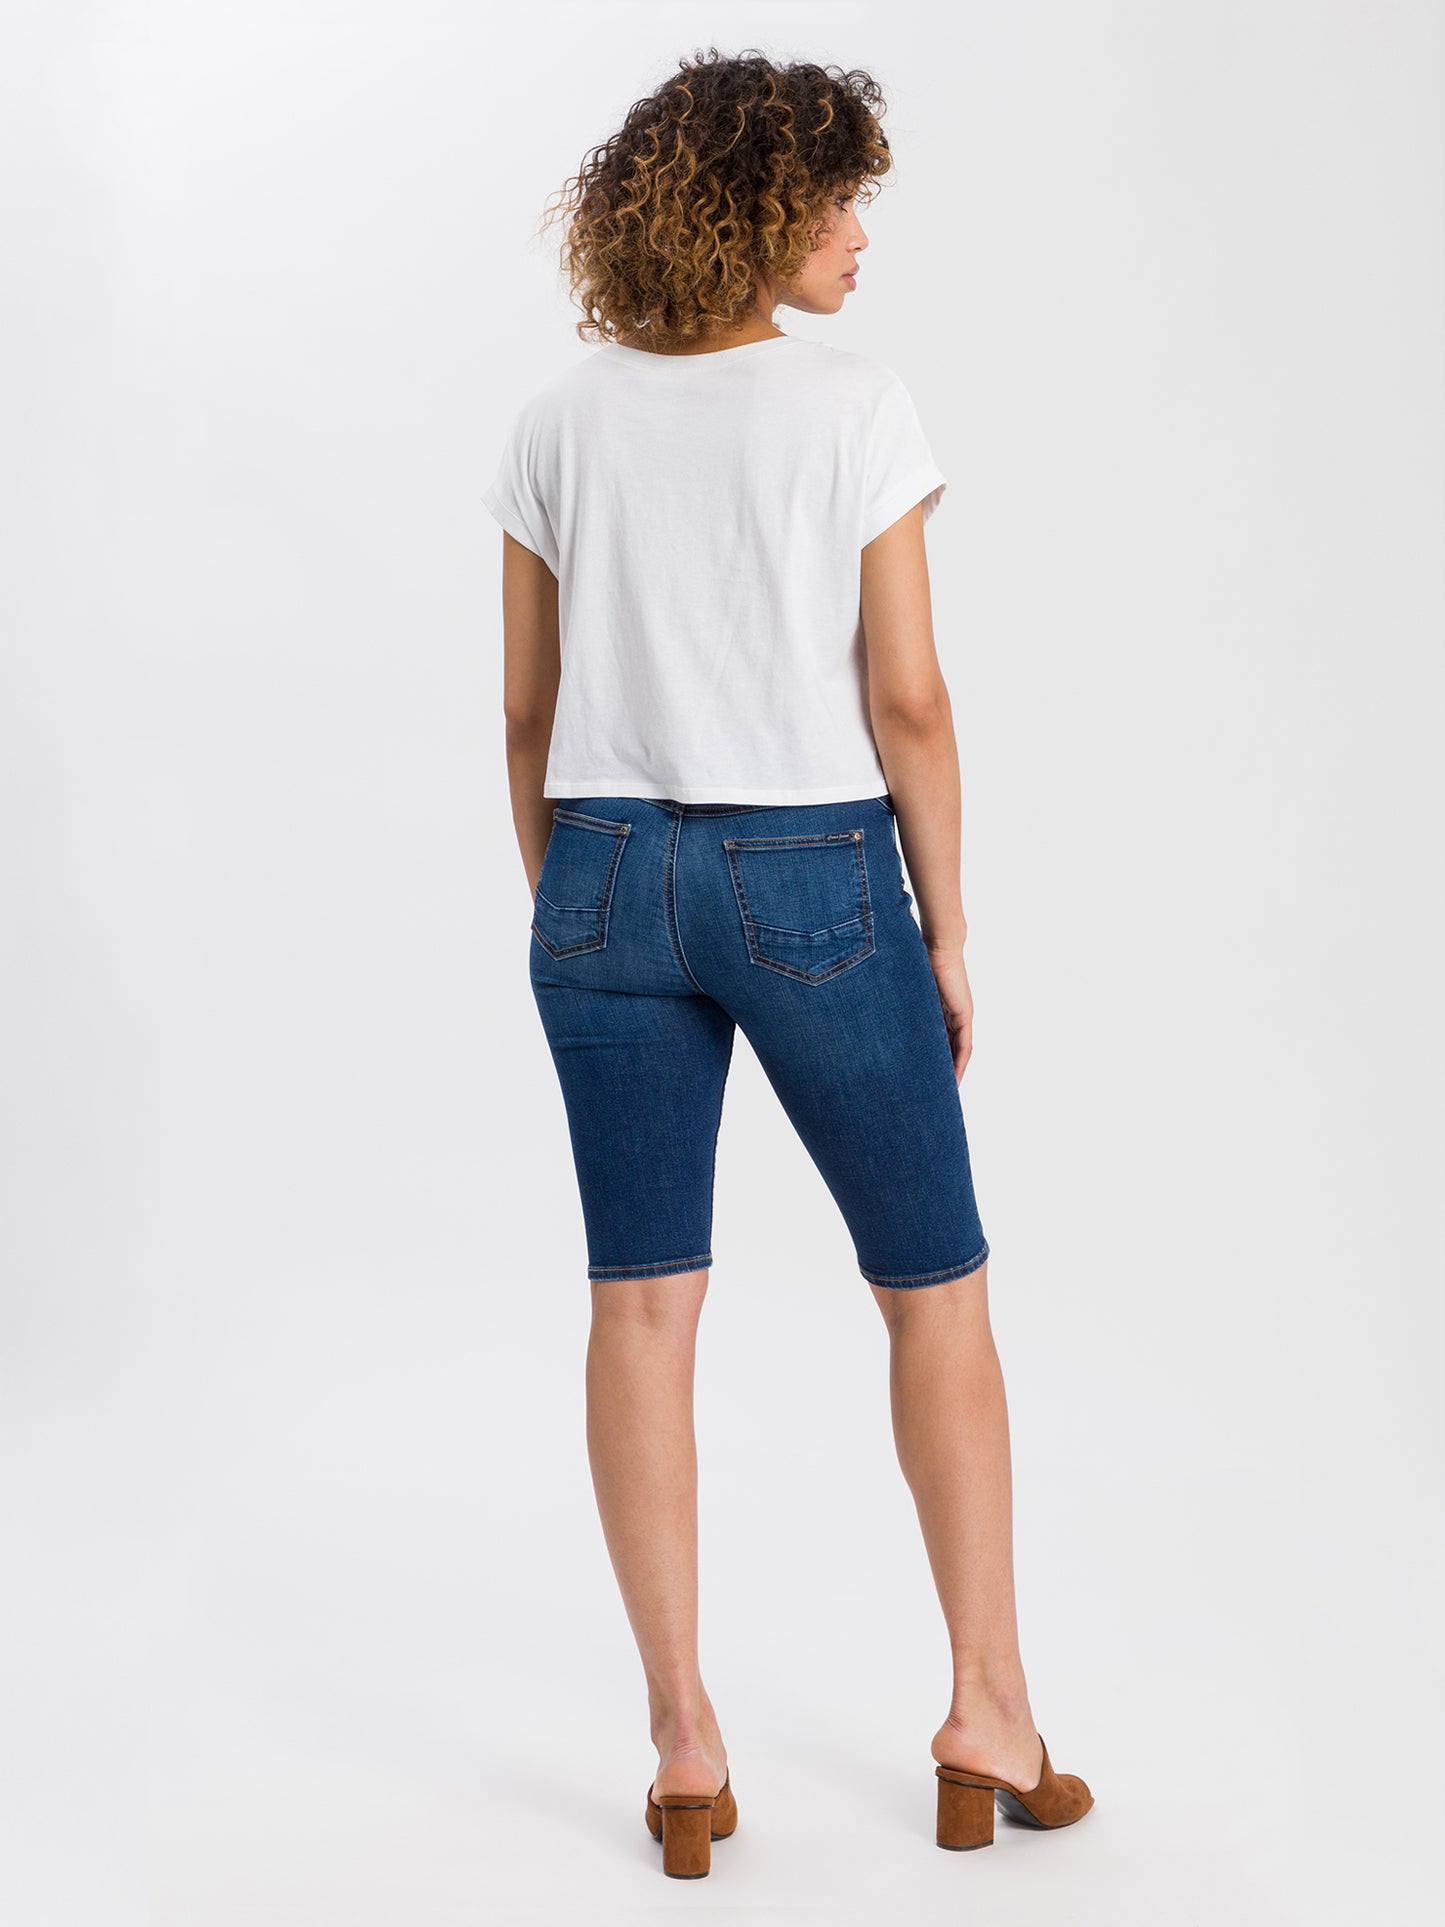 Women's jeans shorts dark blue